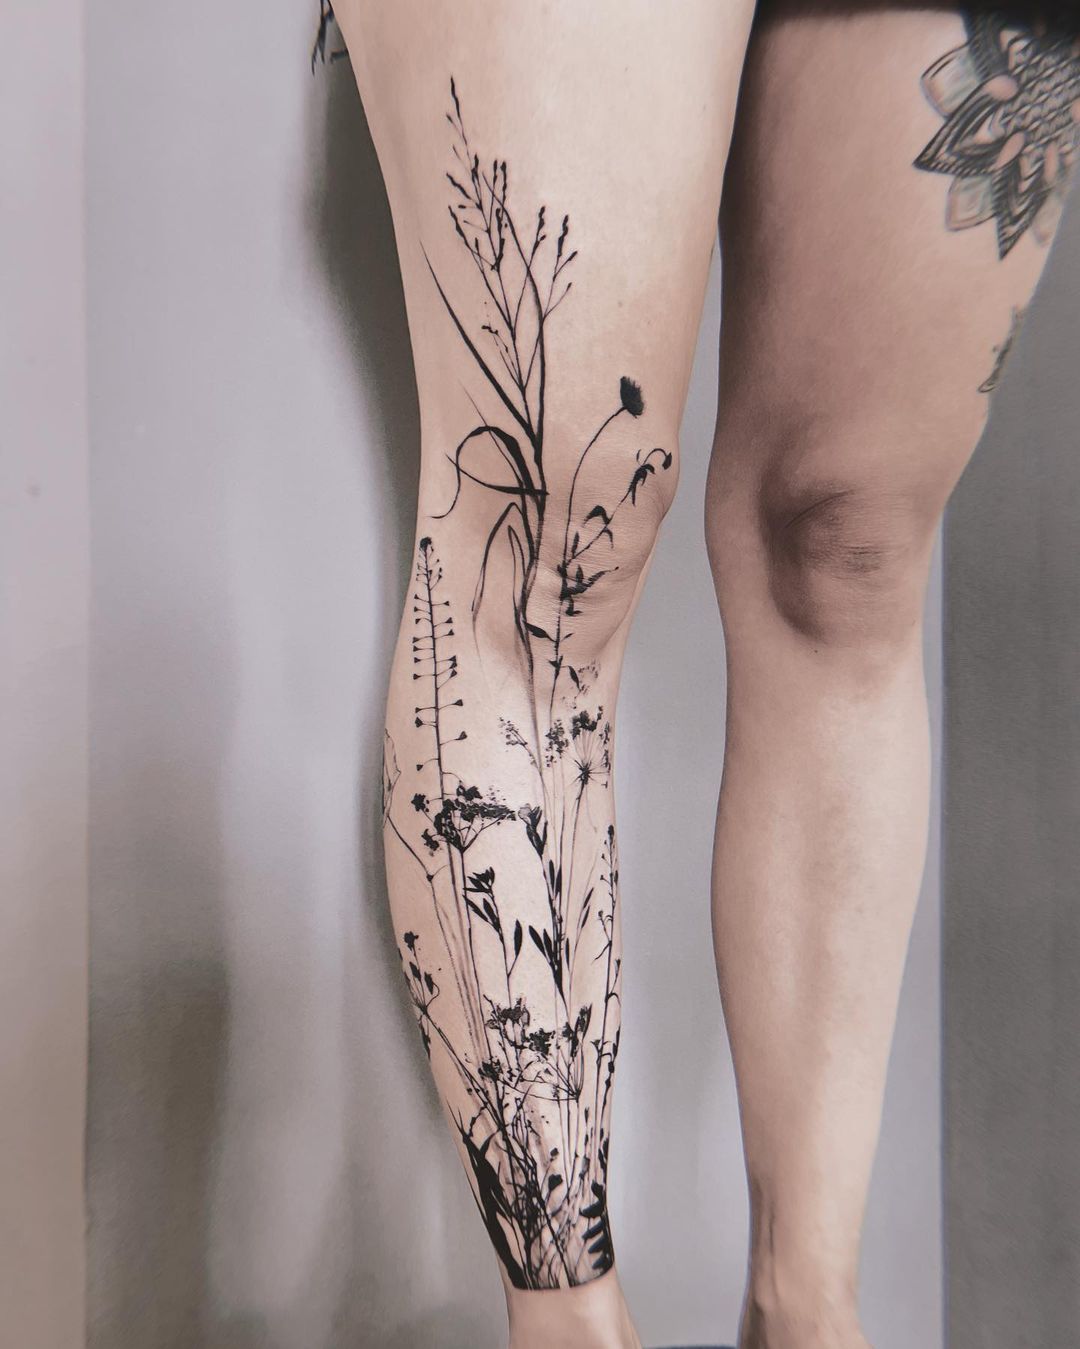 Unqiue abstract tattoo on leg by petra bol.ttt